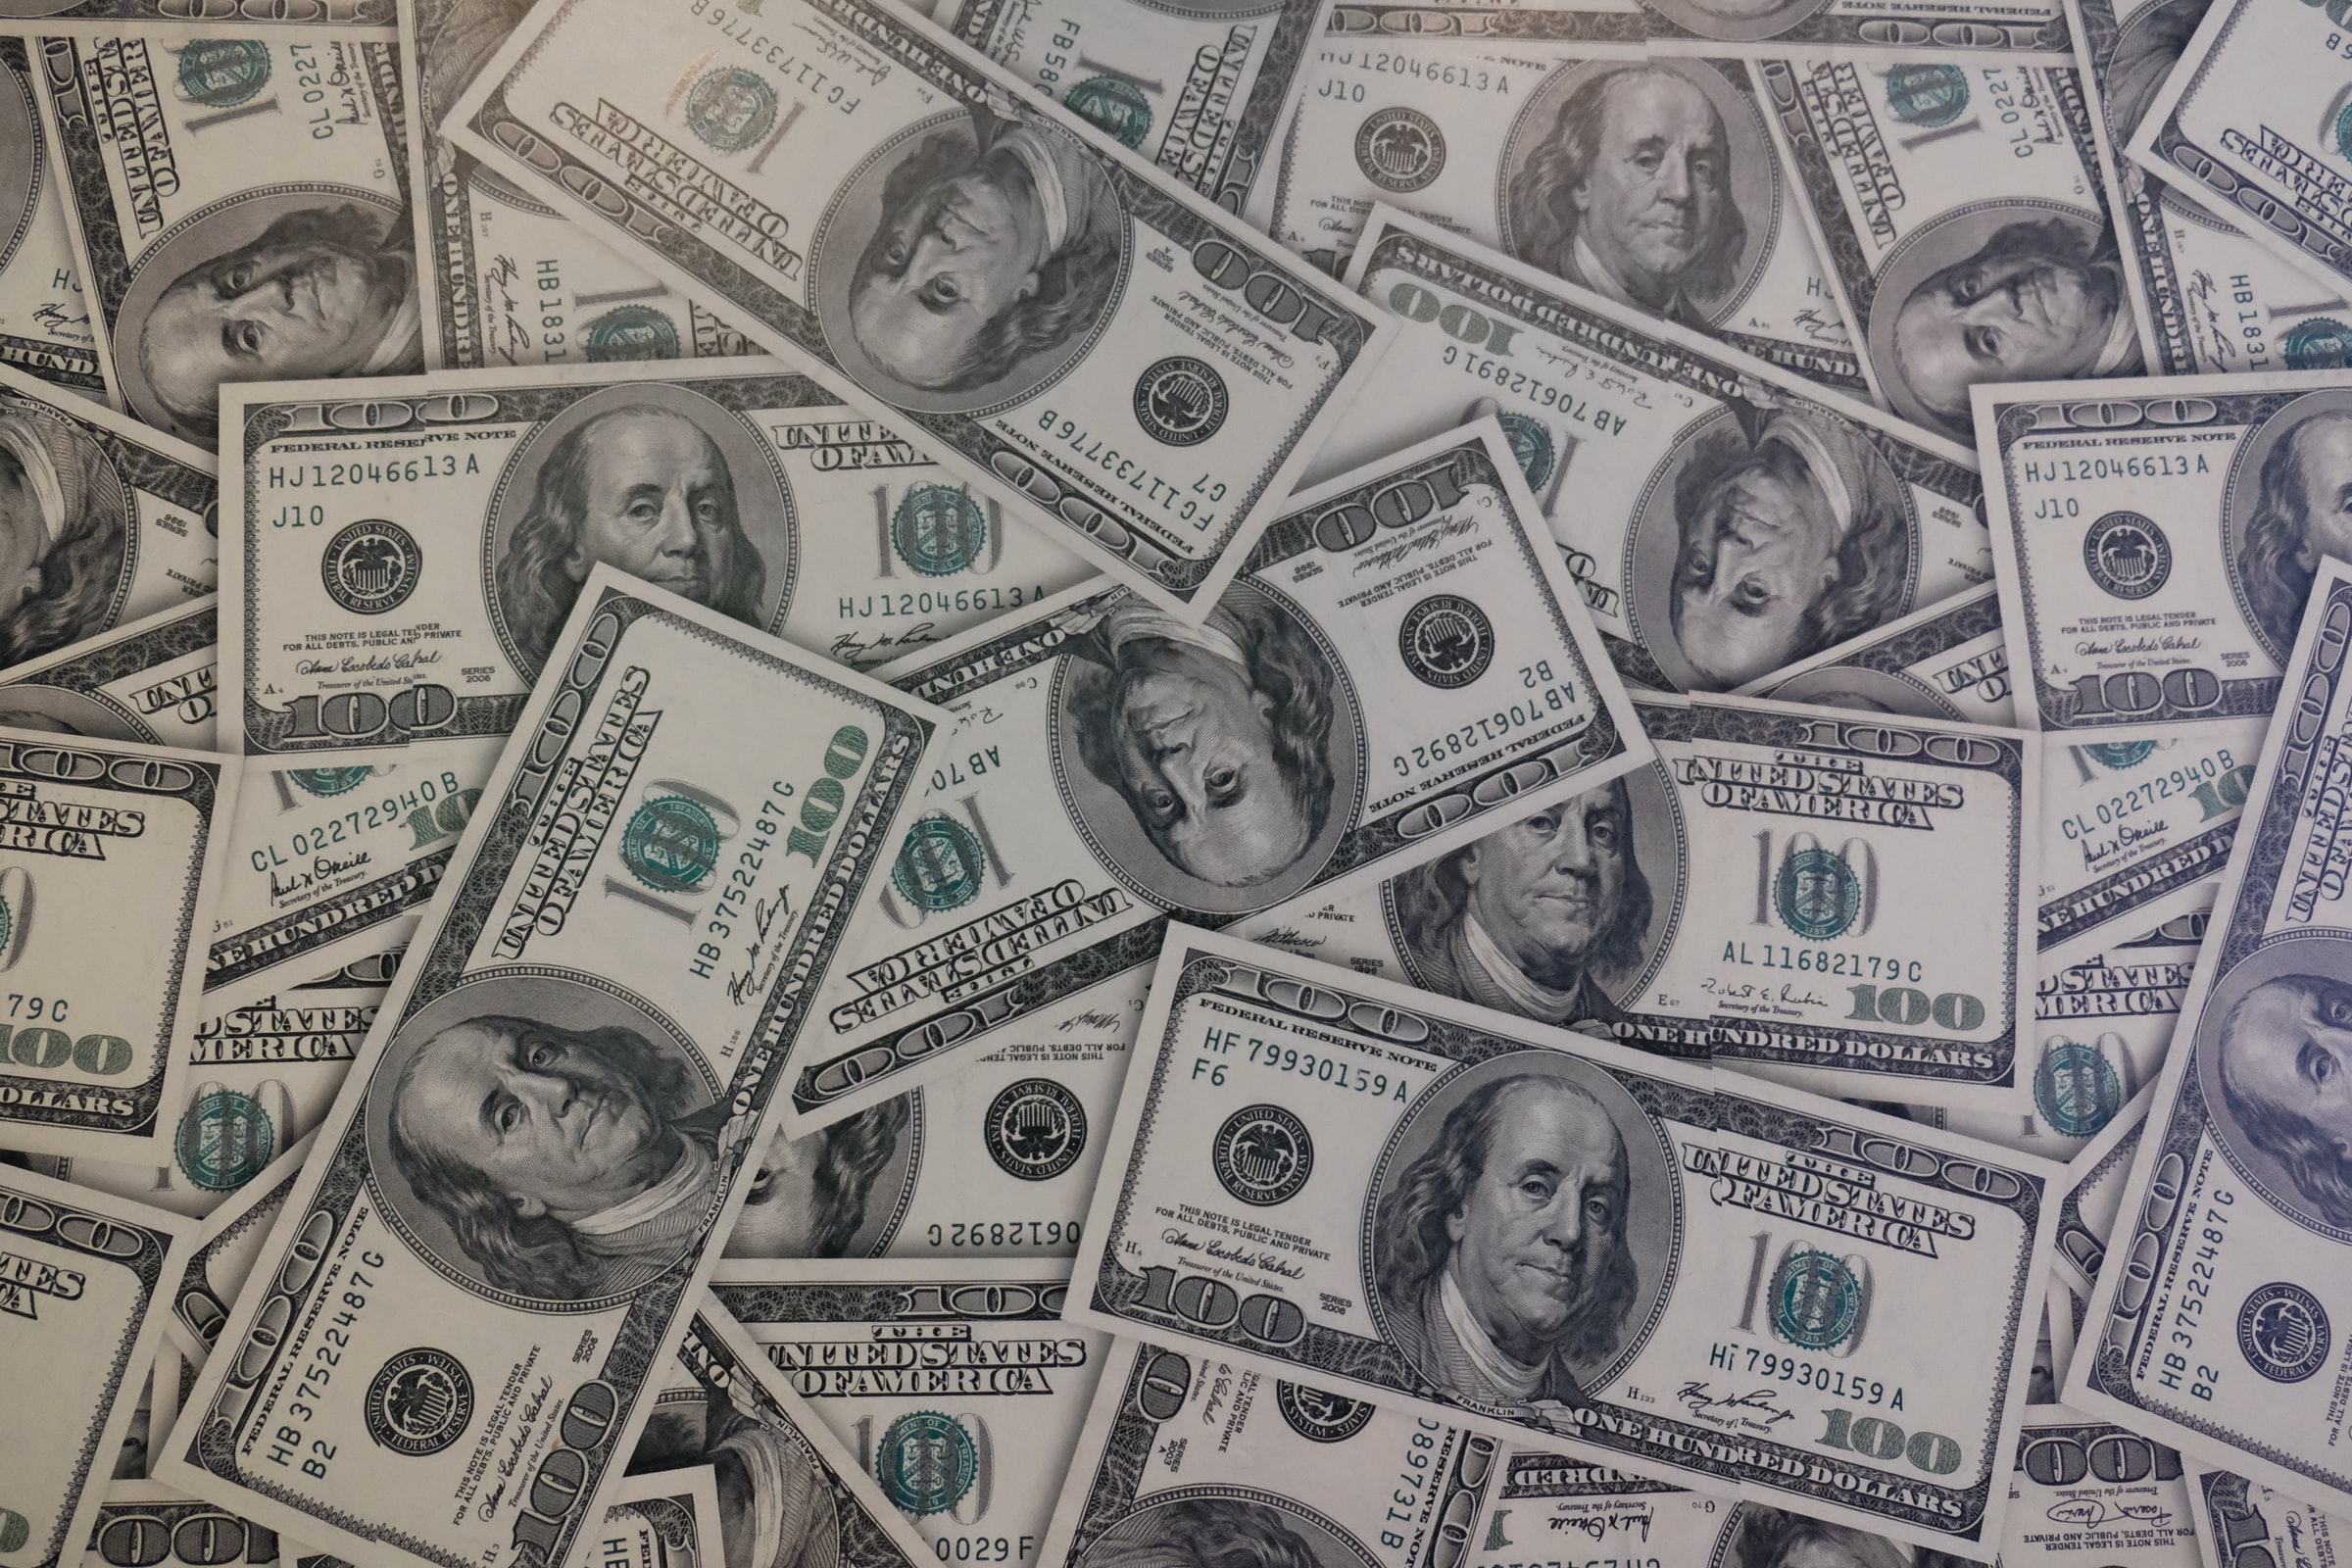 A pile of $100 bills